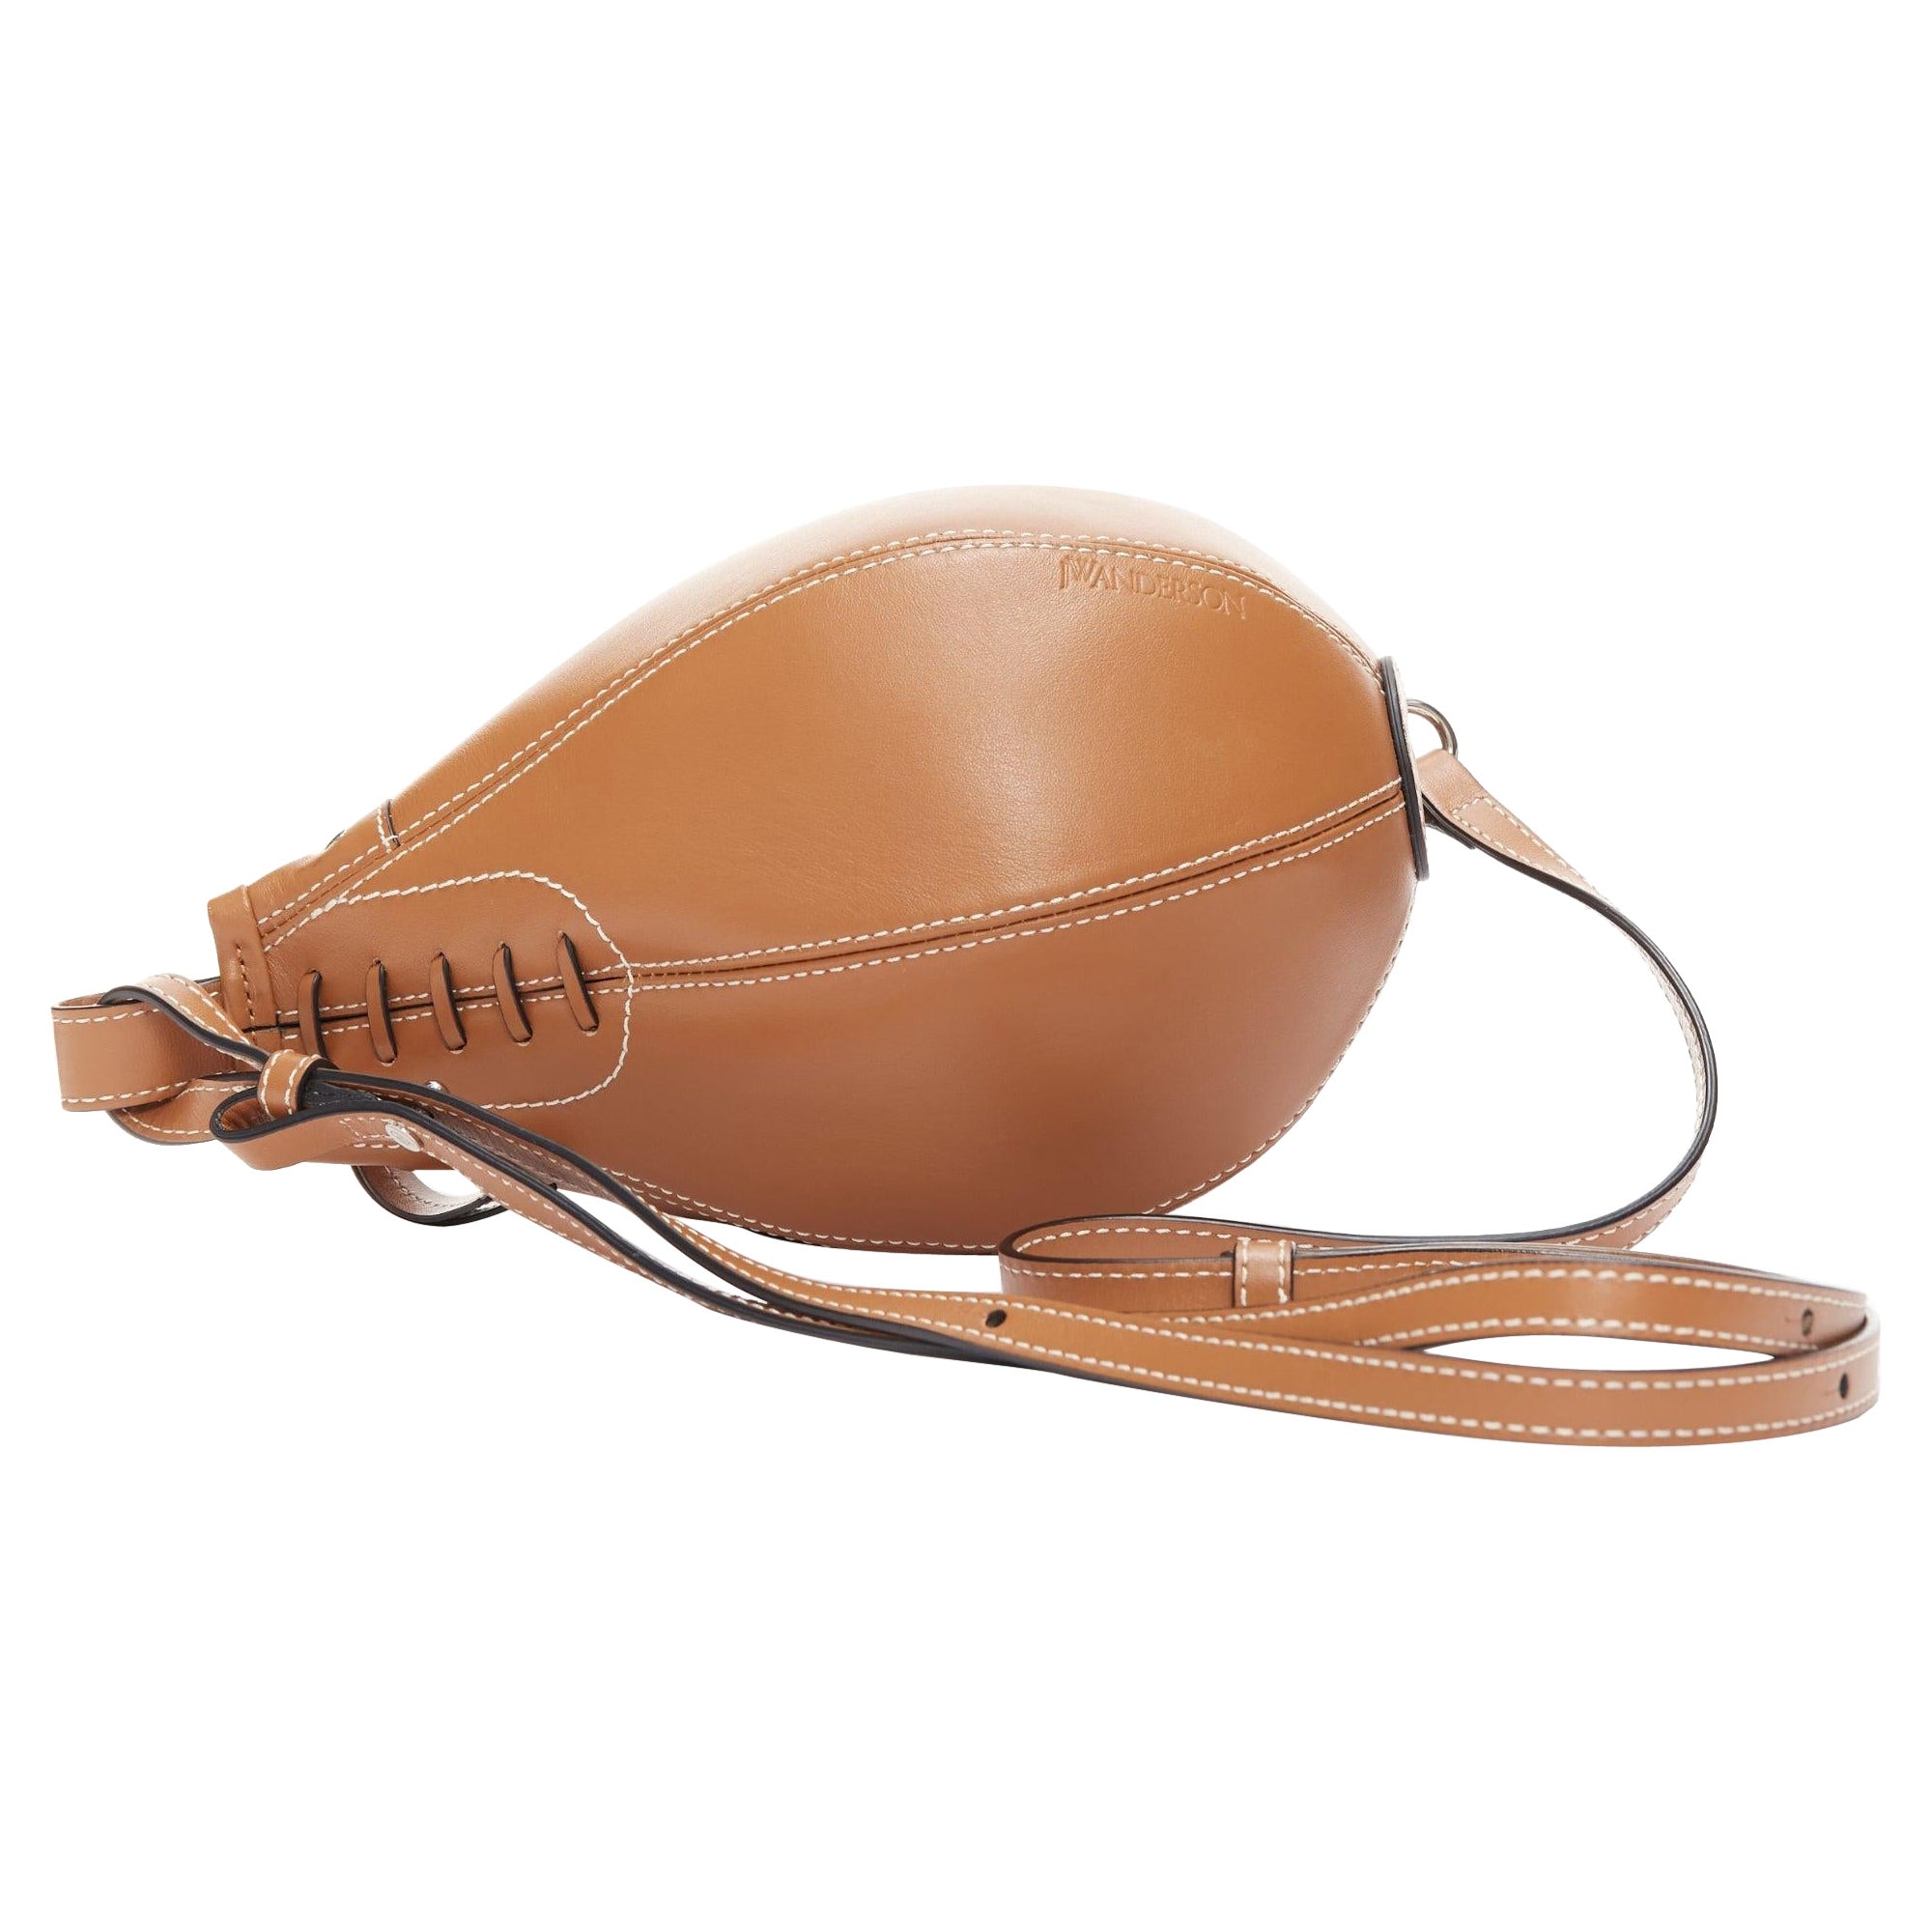 JW ANDERSON Small Punch tan leather logo silver zip teardrop shoulder bag